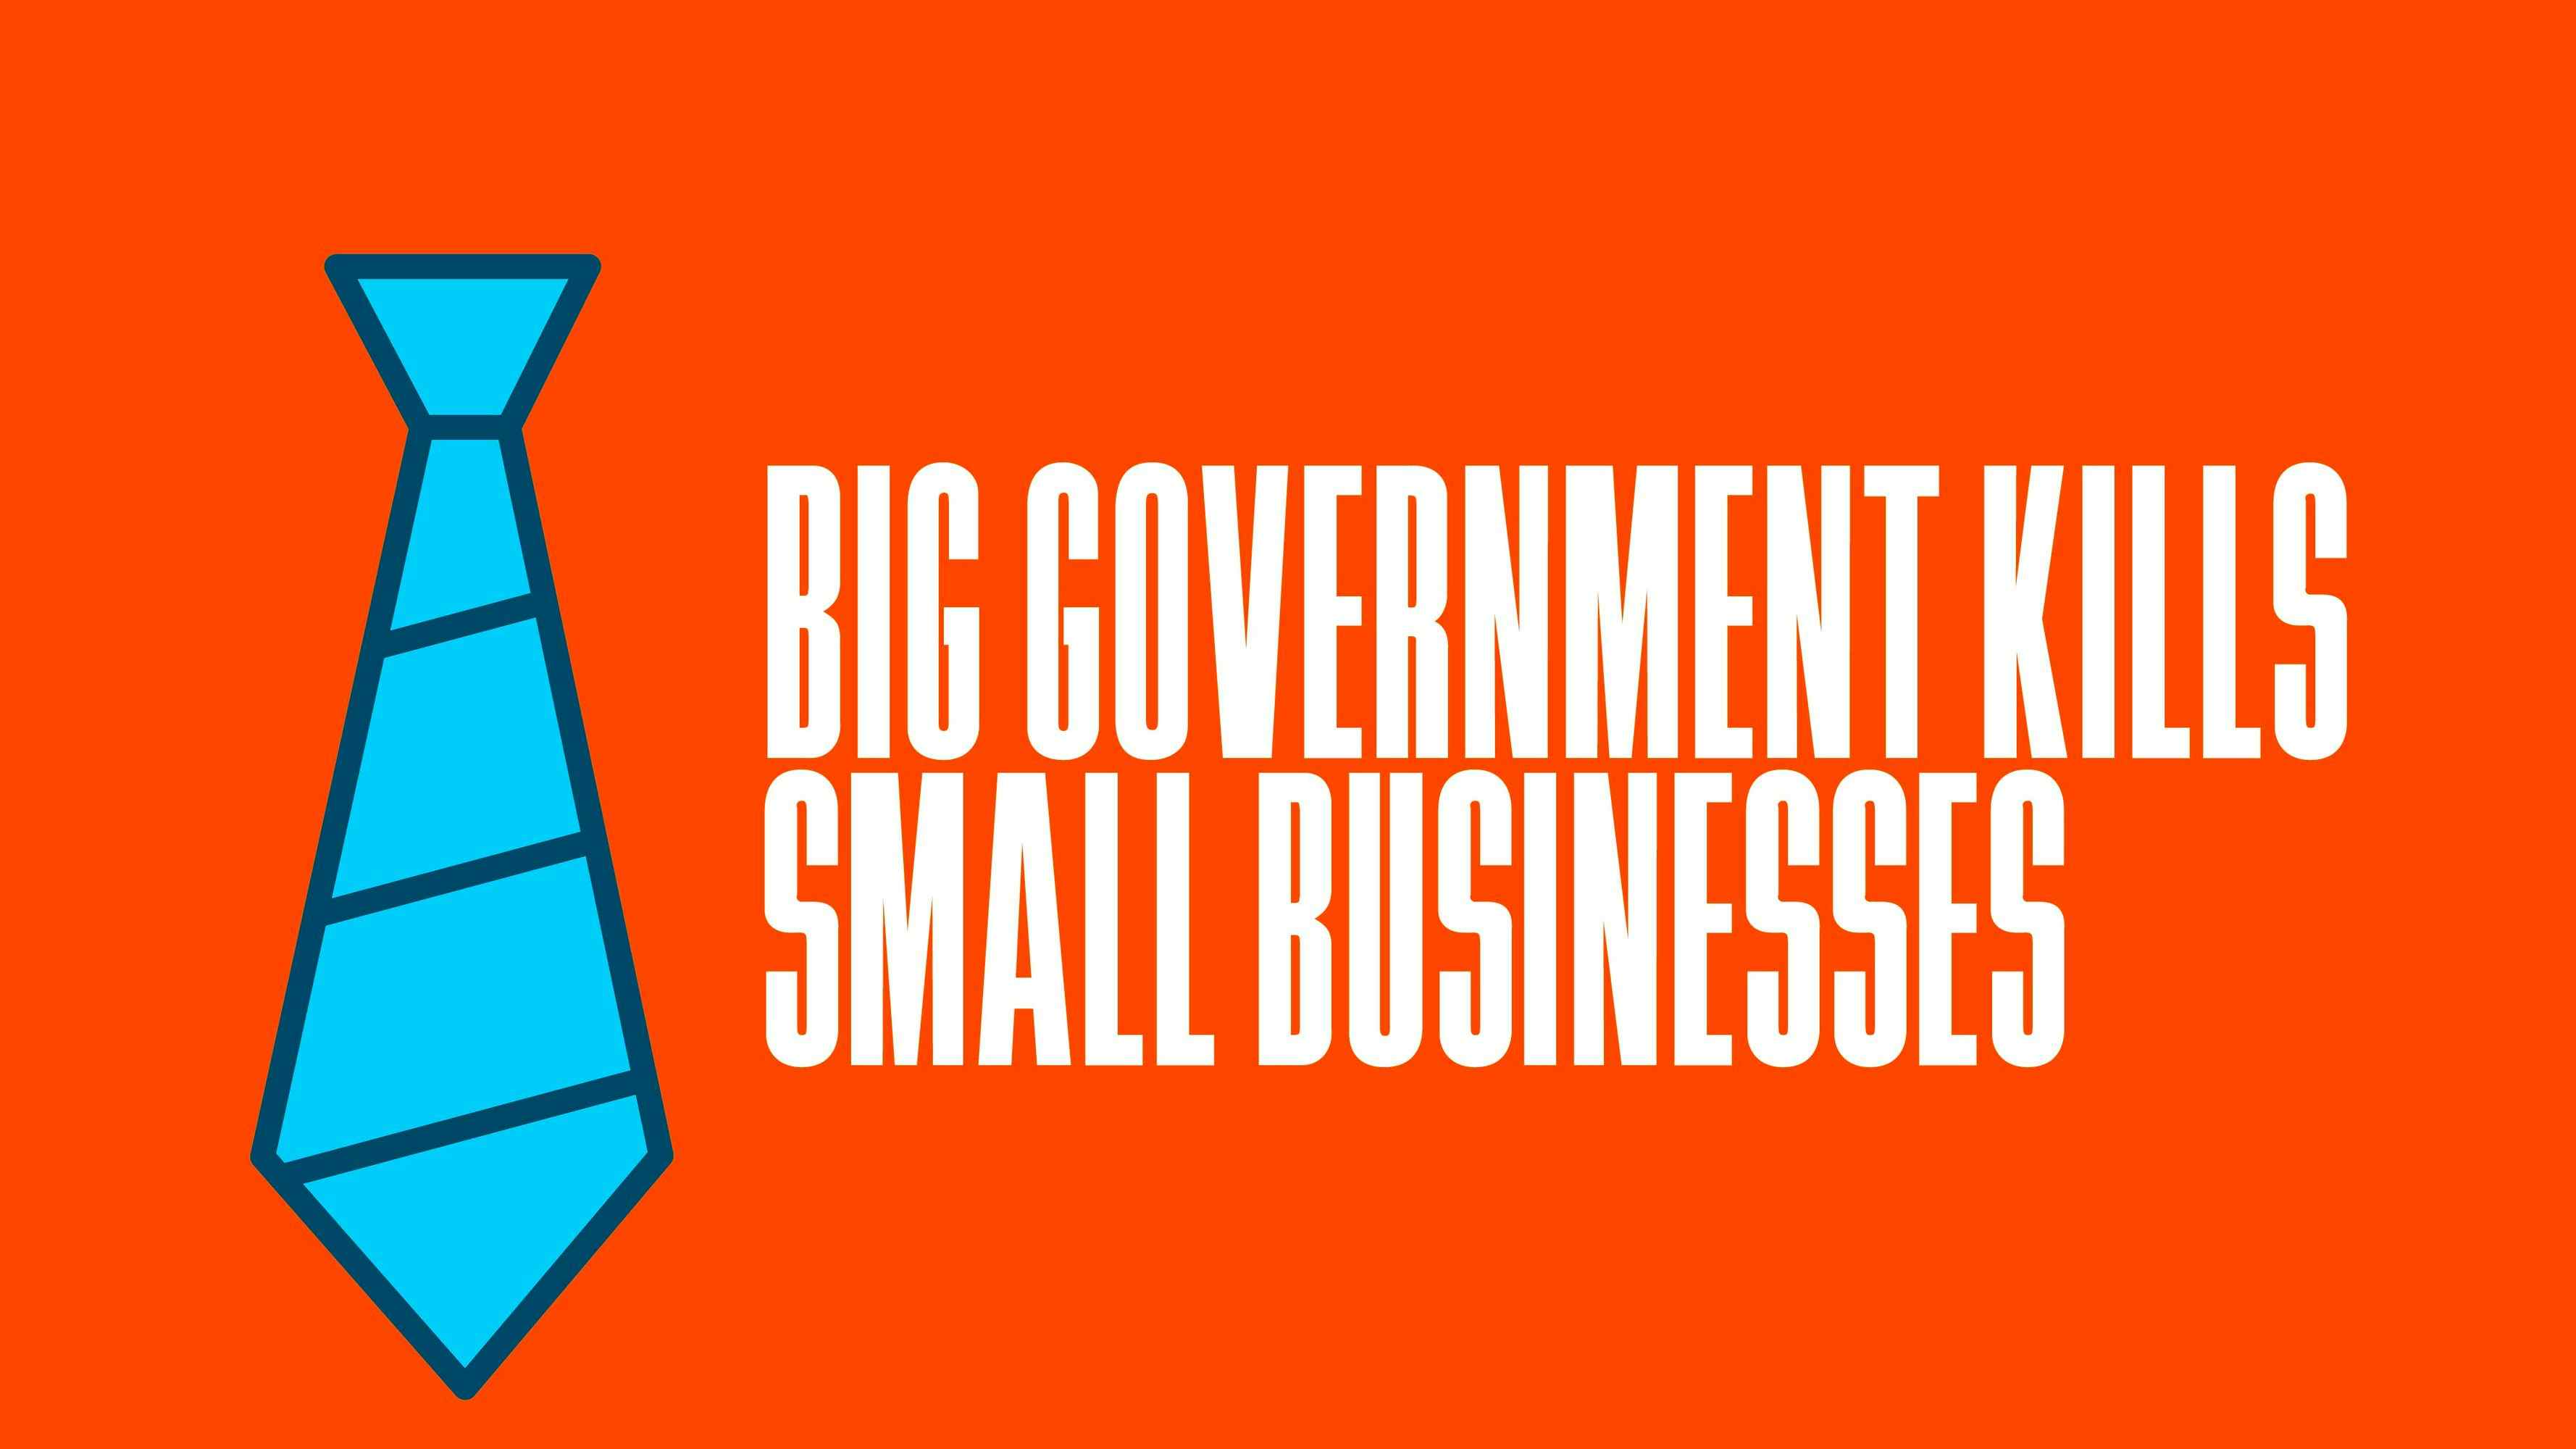 Big Government Kills Small Businesses